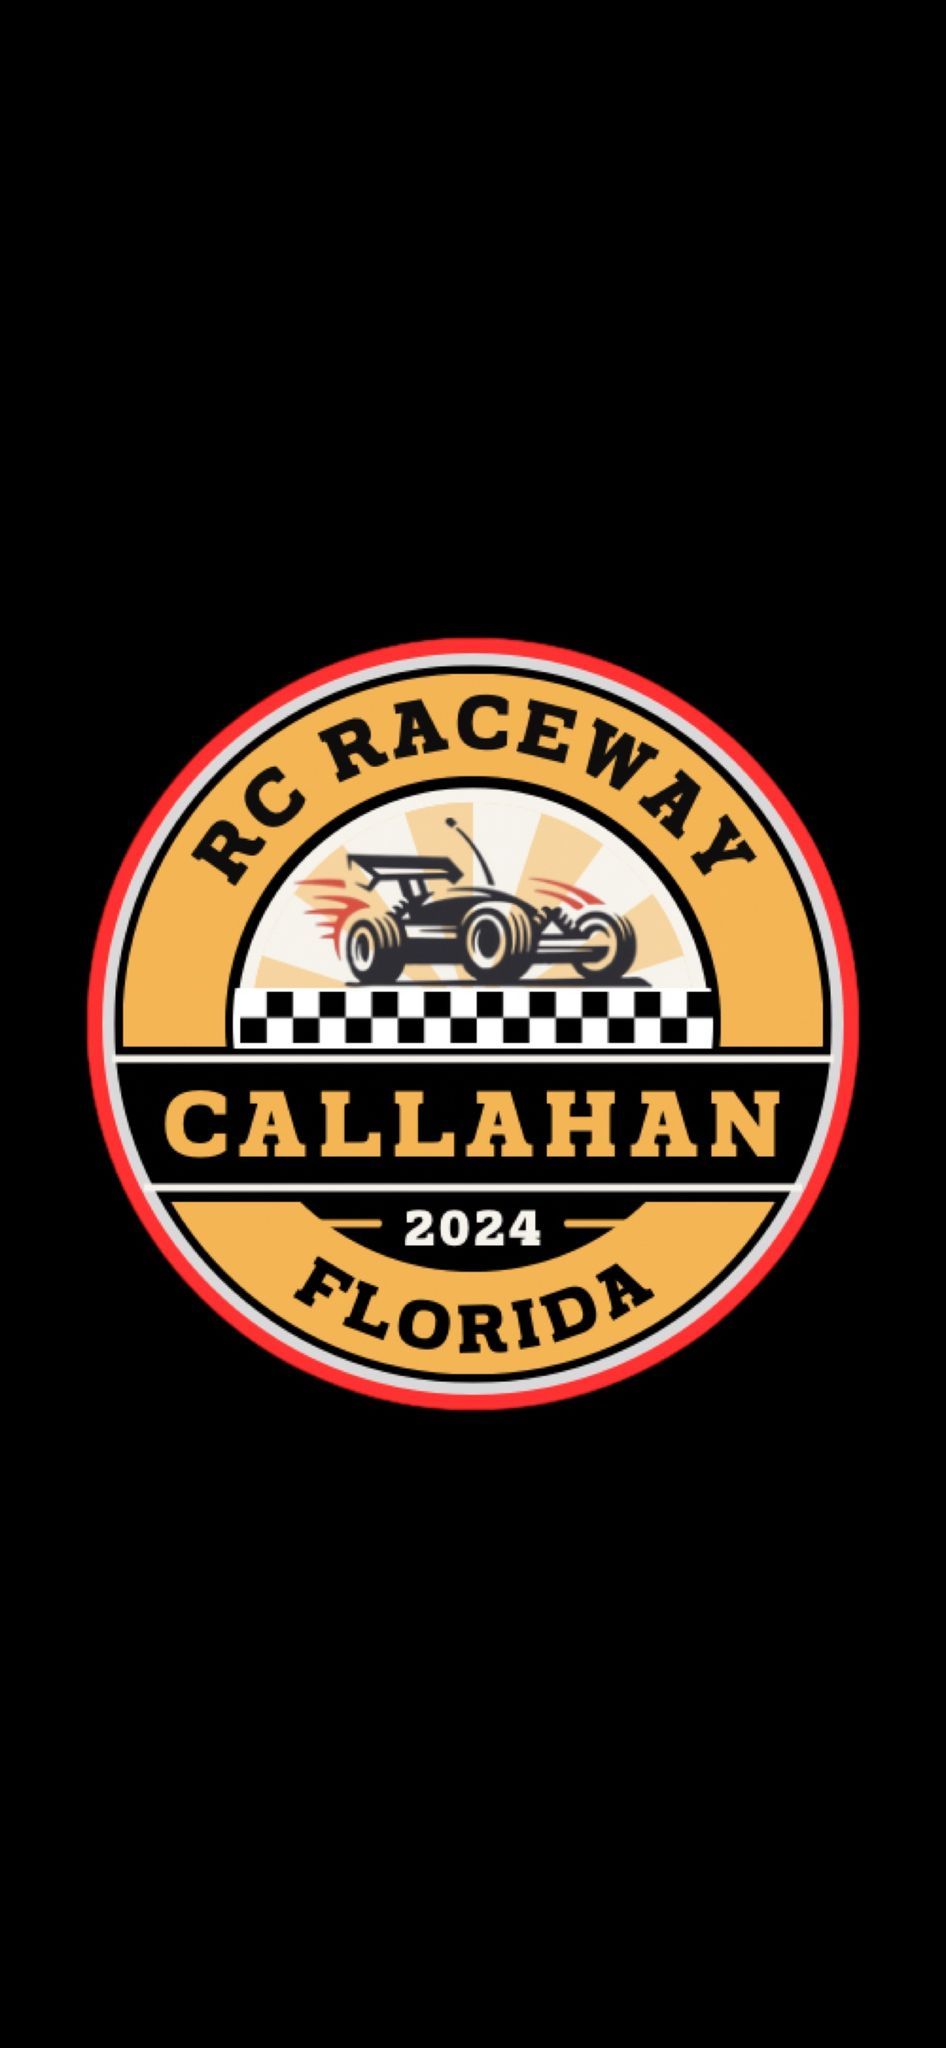 Callahan 1RC (Club Racing)